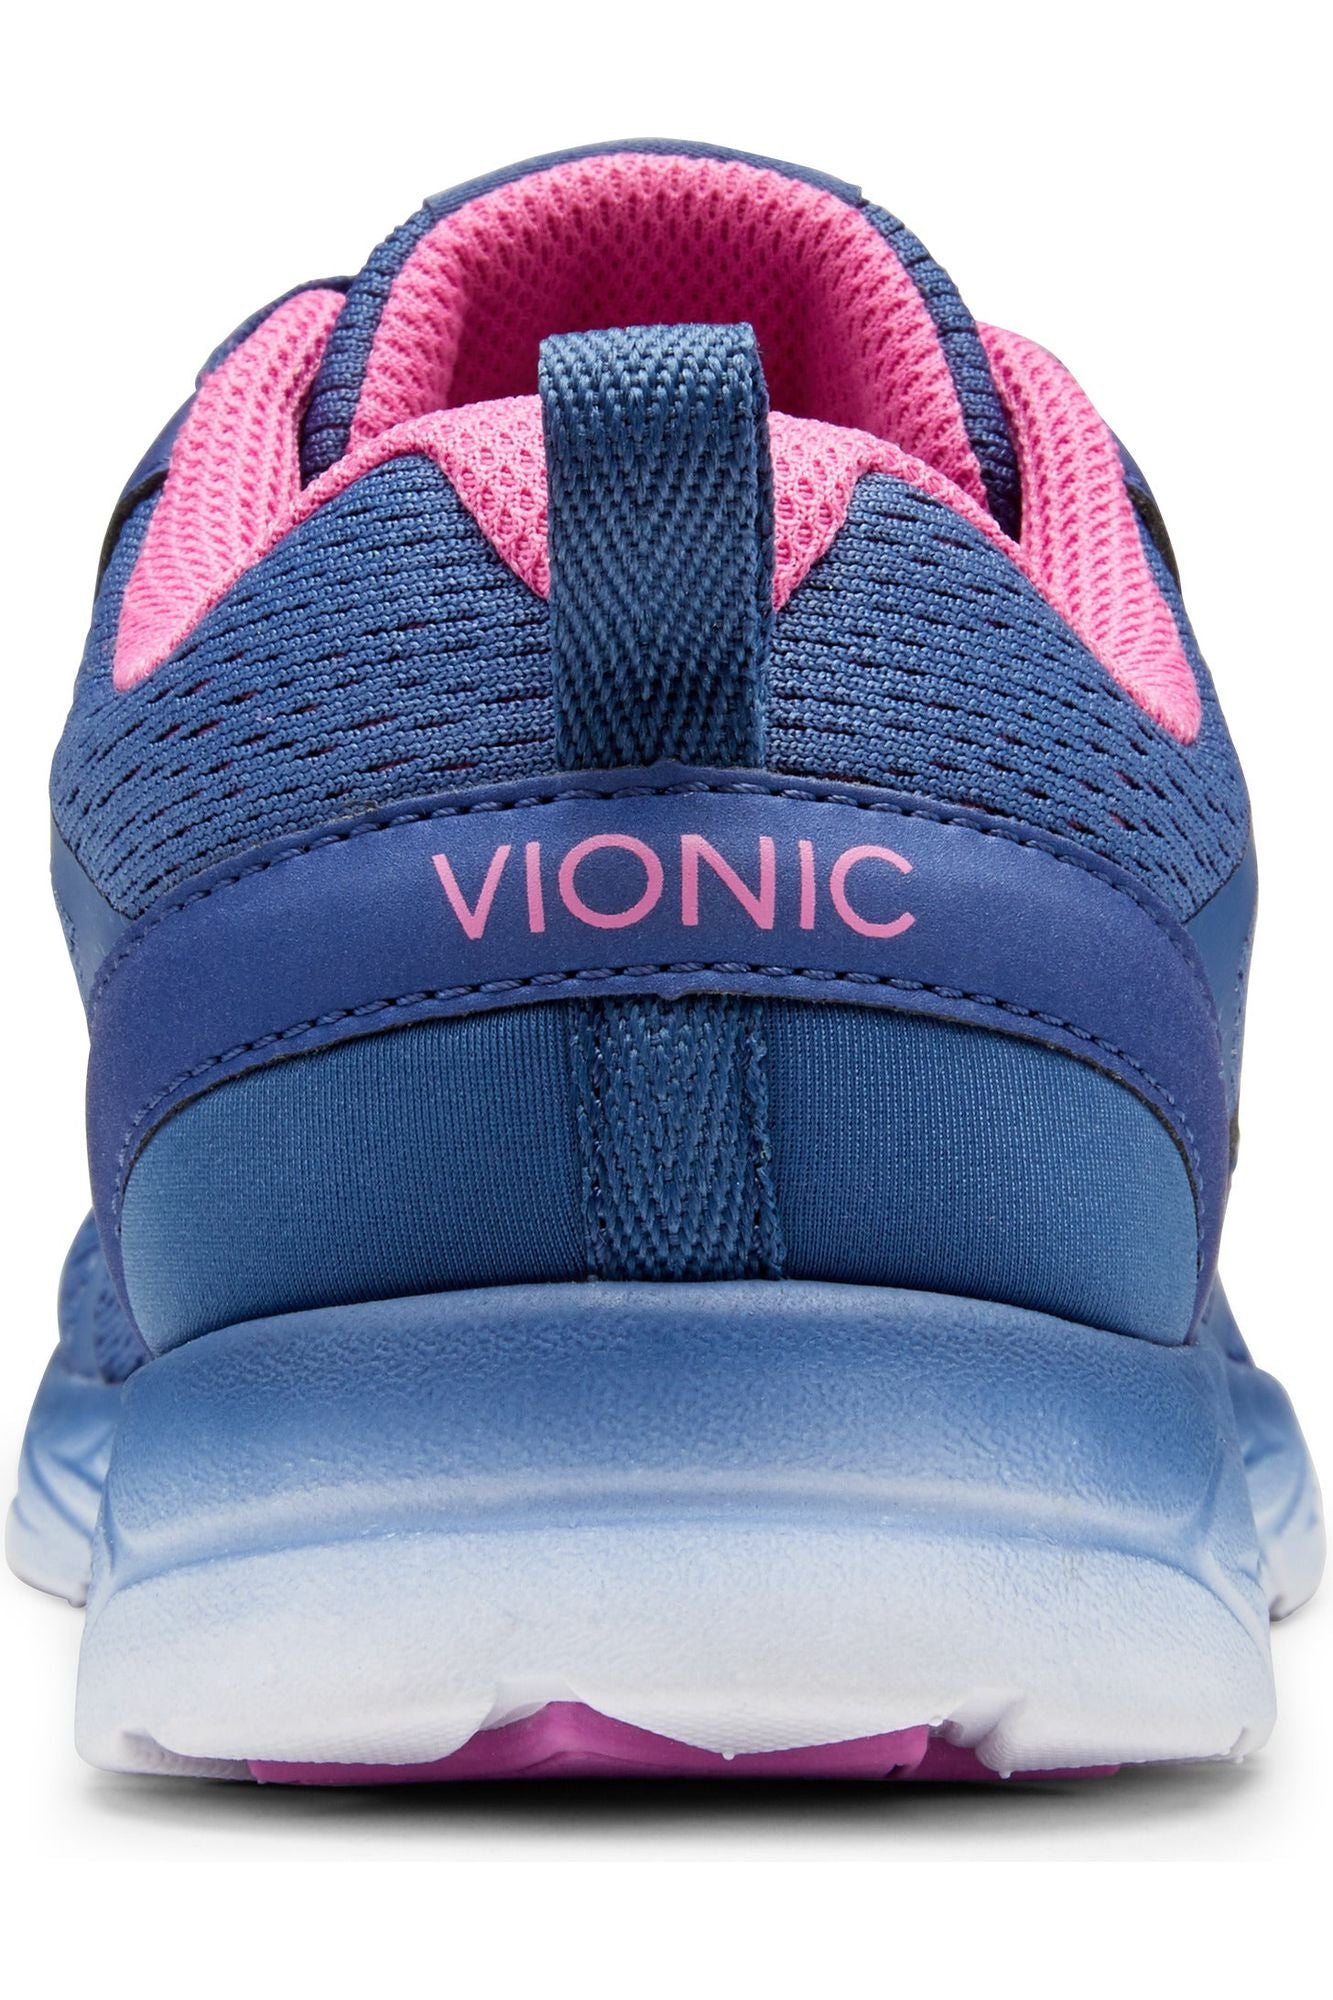 Vionic Brisk Miles Lace-Up Active Sneakers